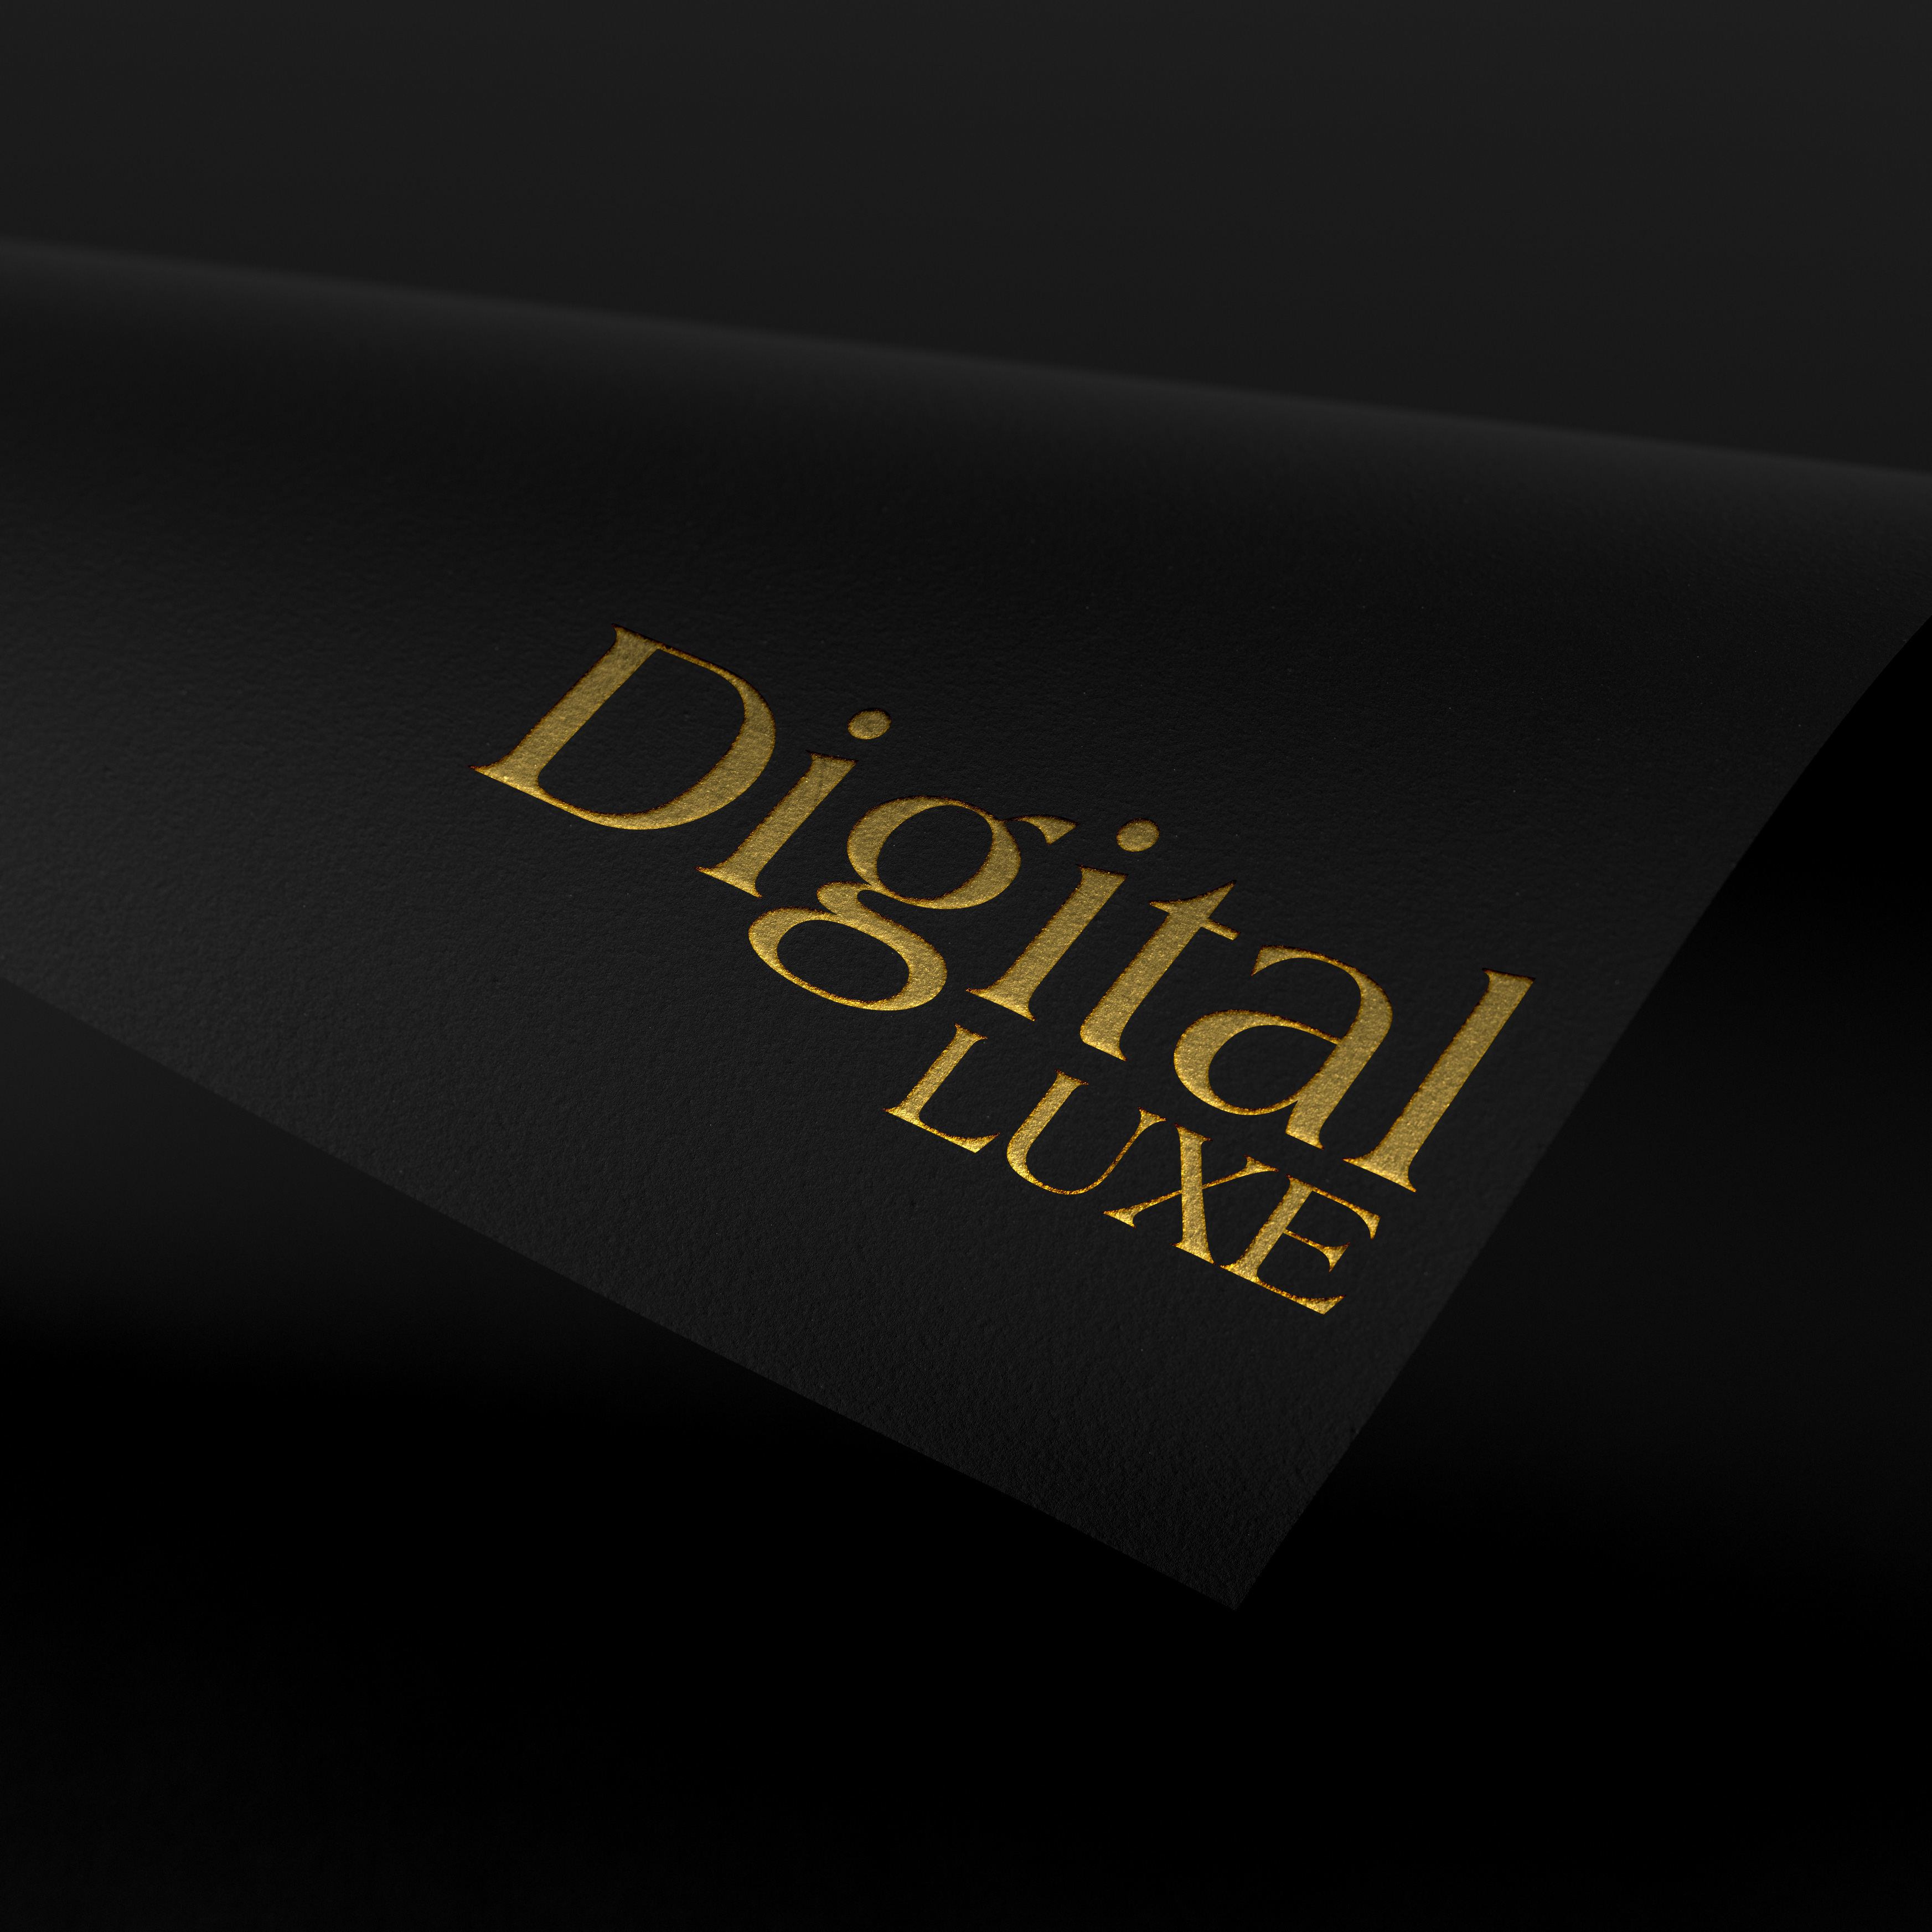 Digital Luxe